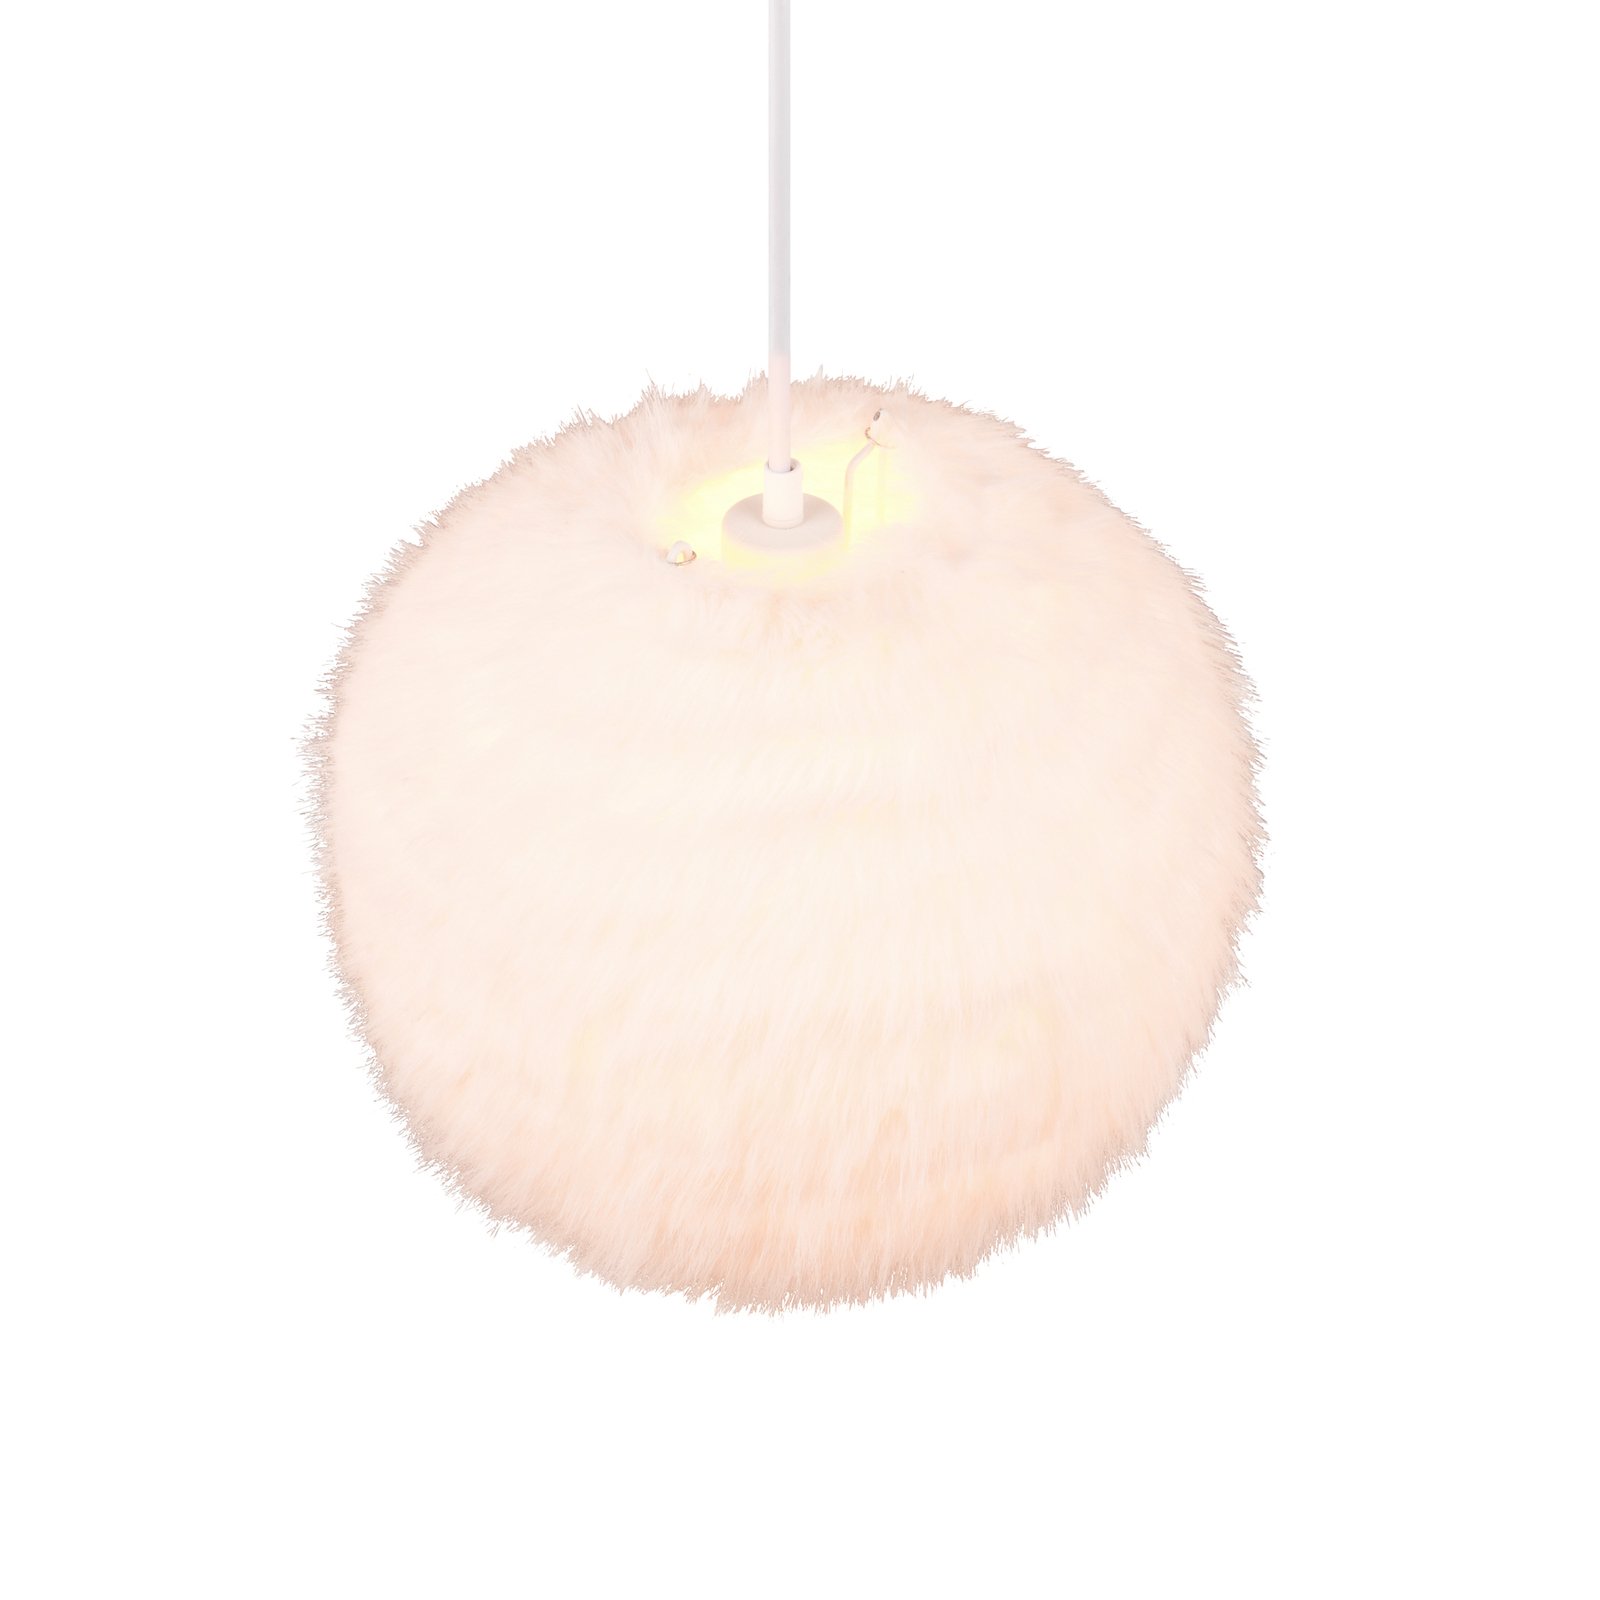 Furry pendant light, Ø 35 cm, sand-coloured, synthetic plush